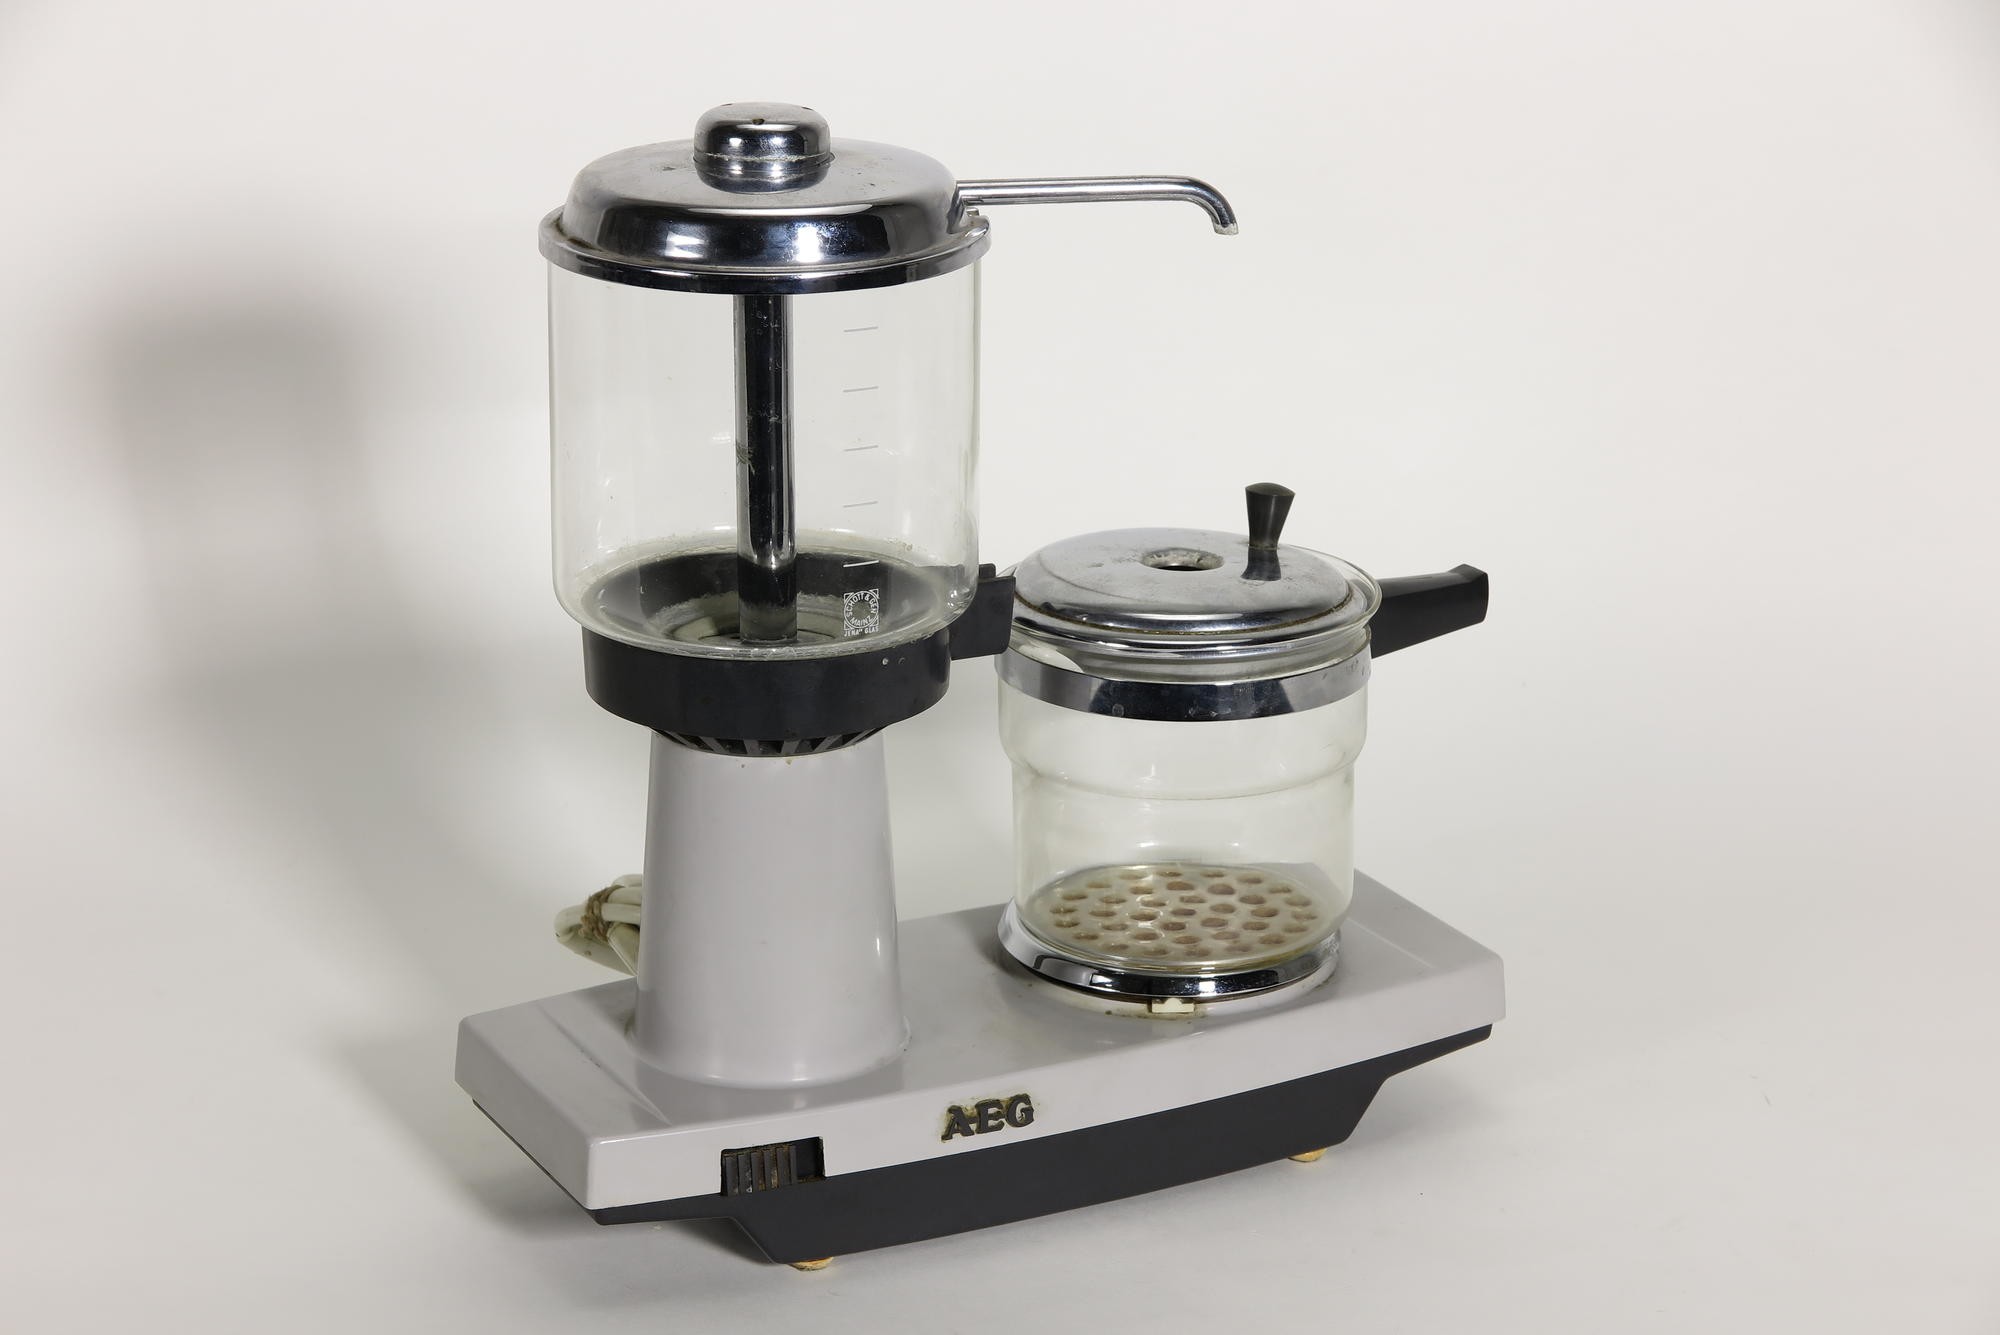 Vollautomatischer Kaffeefilter AEG Typ KF `AEG - automatic filter` (Stiftung Deutsches Technikmuseum Berlin CC0)